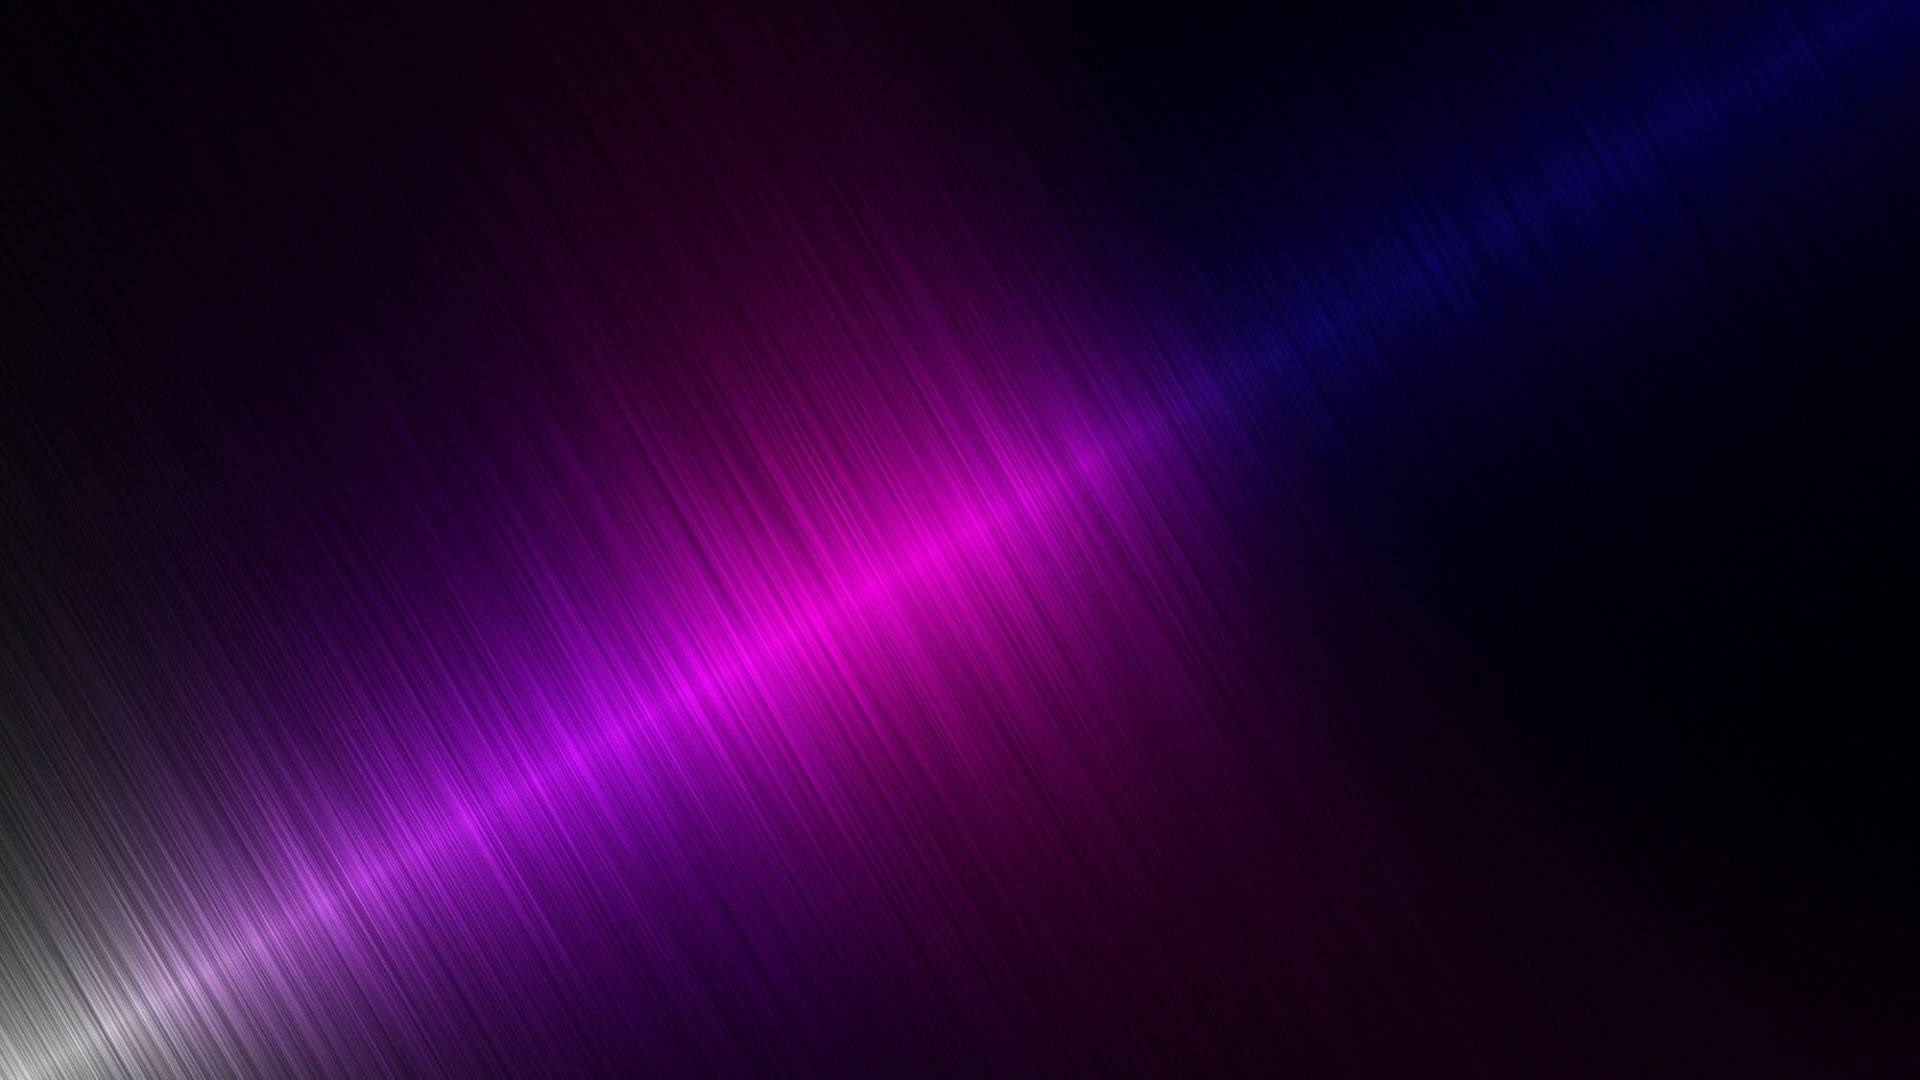 1920x1080 abstract purple wallpaper pack 1080p hd (Wenham Little 1920 x 1080)